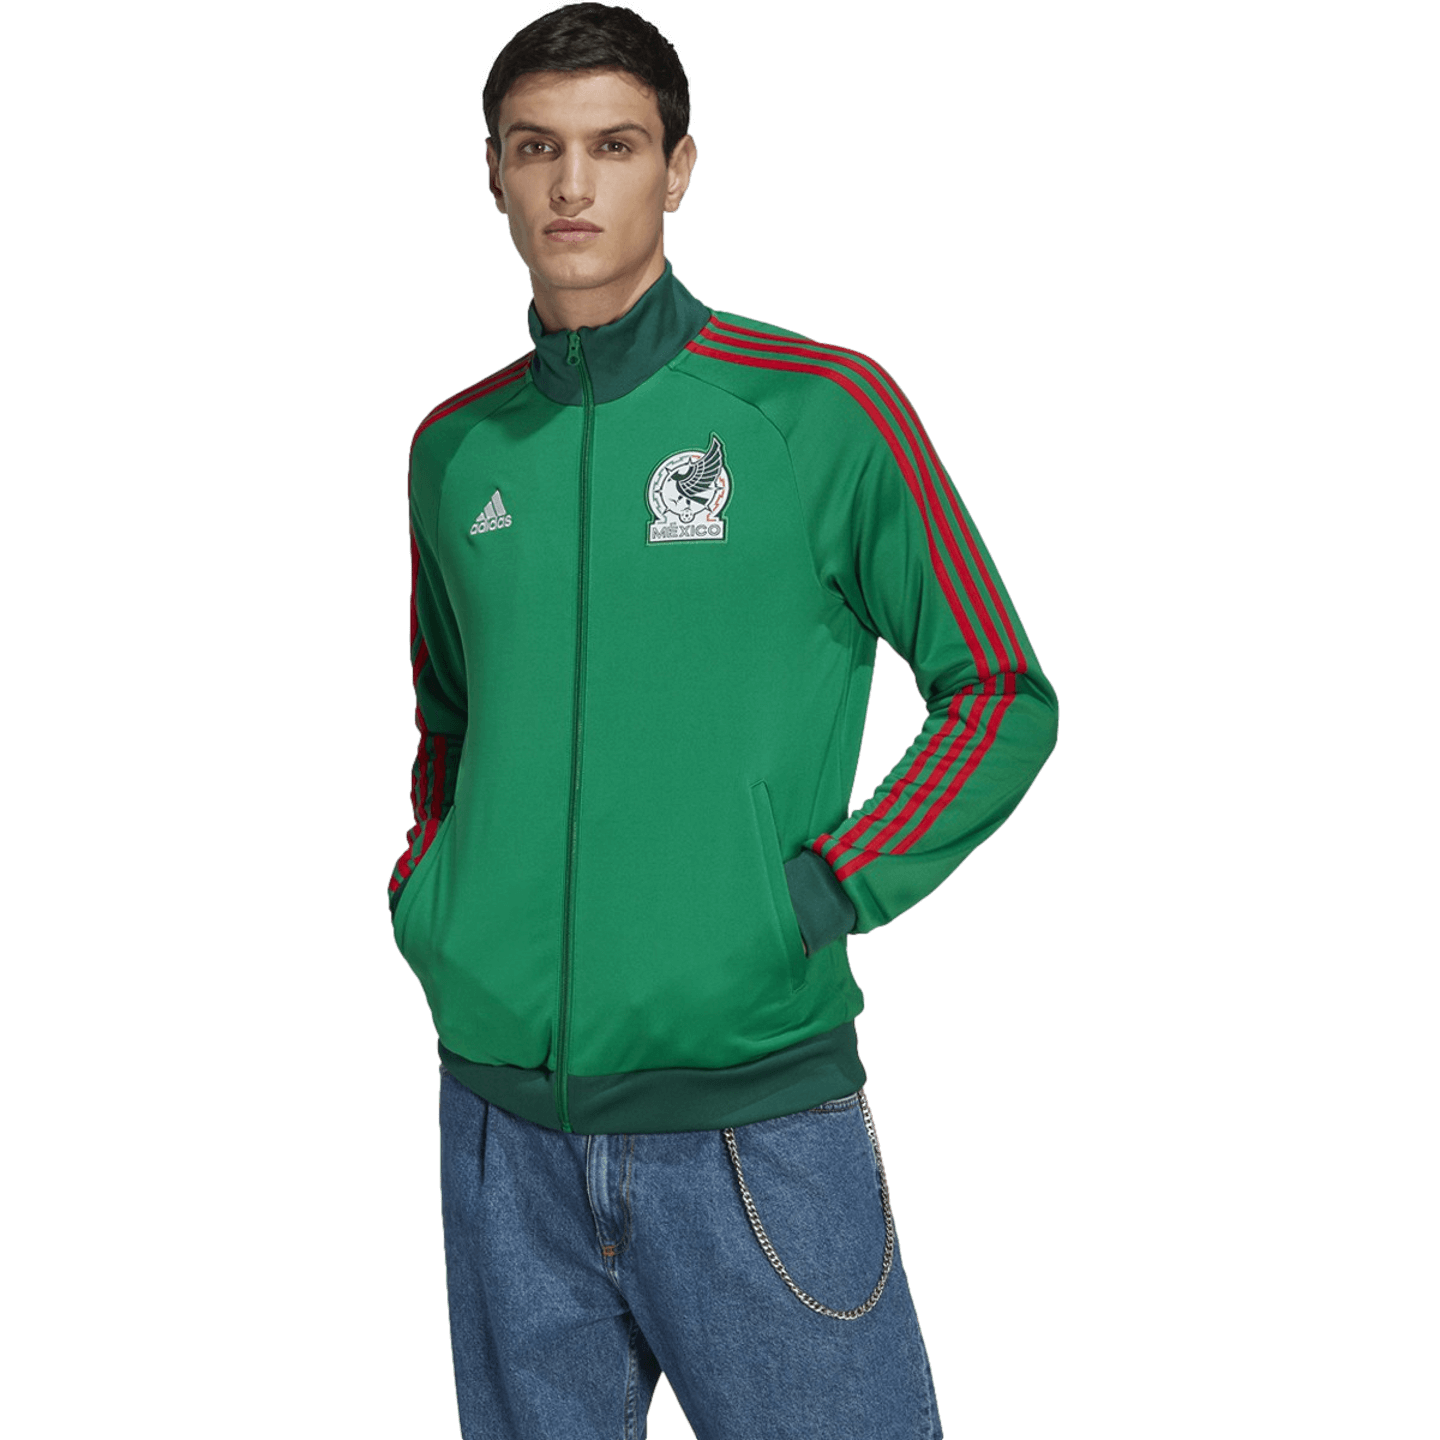 Adidas Mexico DNA Track Top Jacket